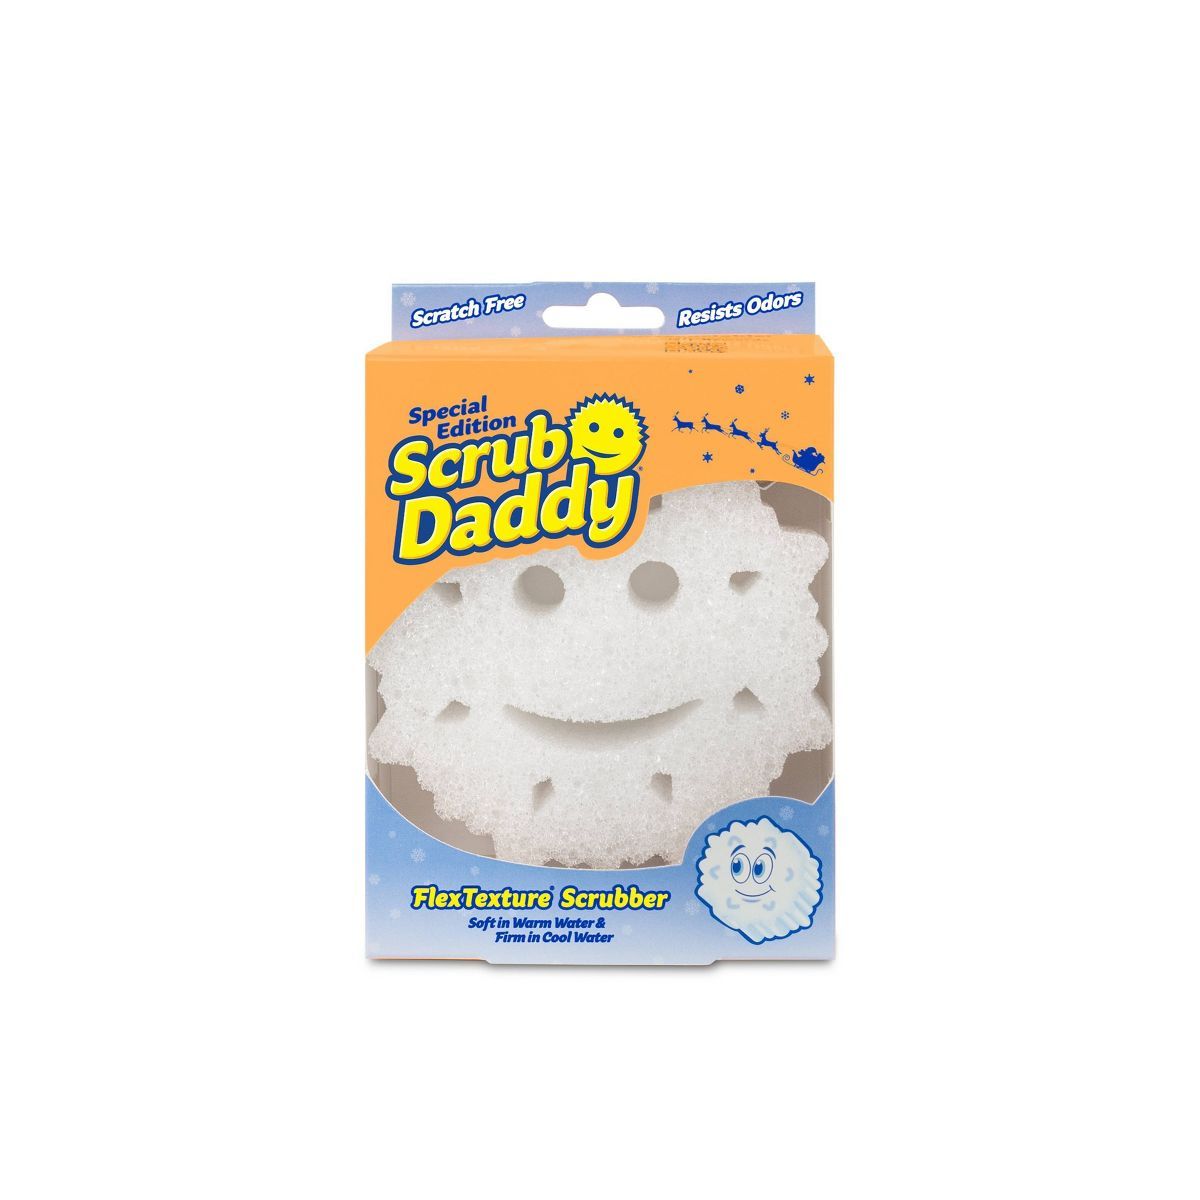 Scrub Daddy Special Edition FlexTexture Scrubber | Target